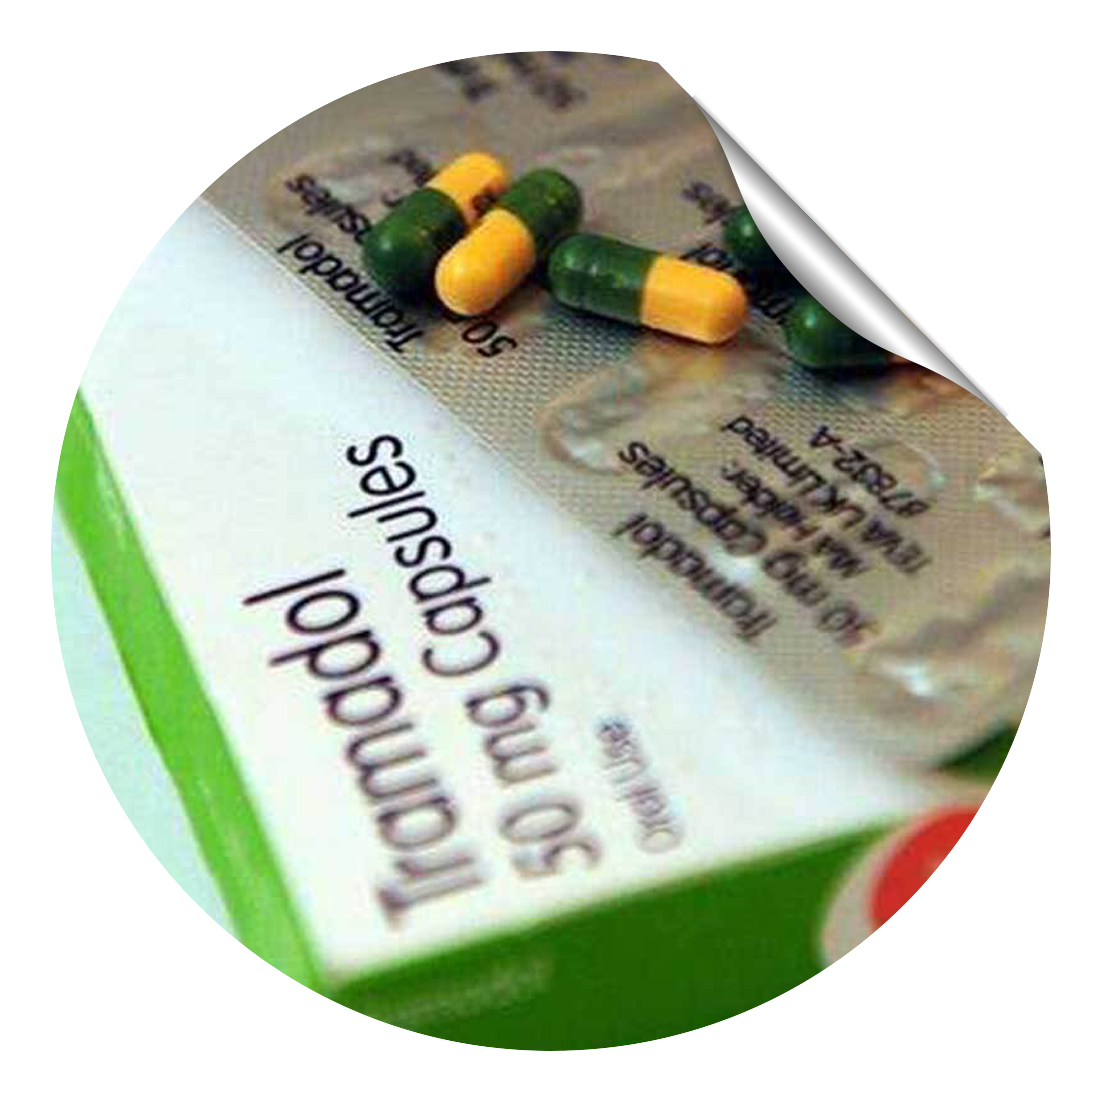 Adderall 30 mg